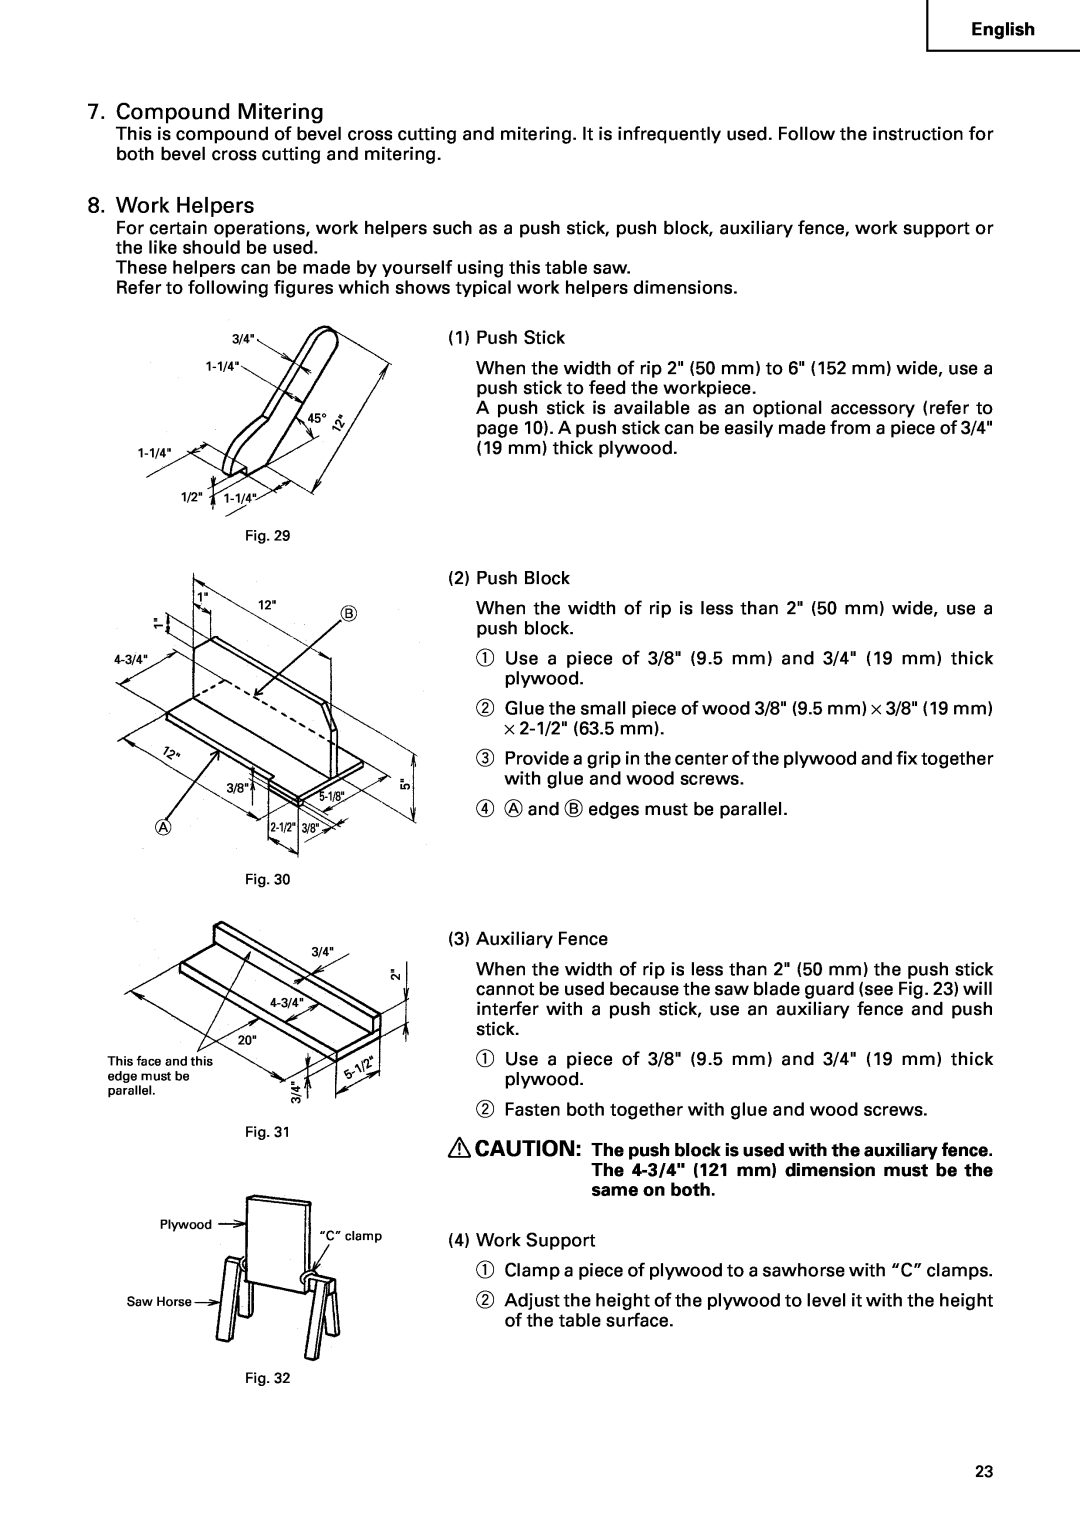 Hitachi C10RA2 instruction manual Compound Mitering, Work Helpers 